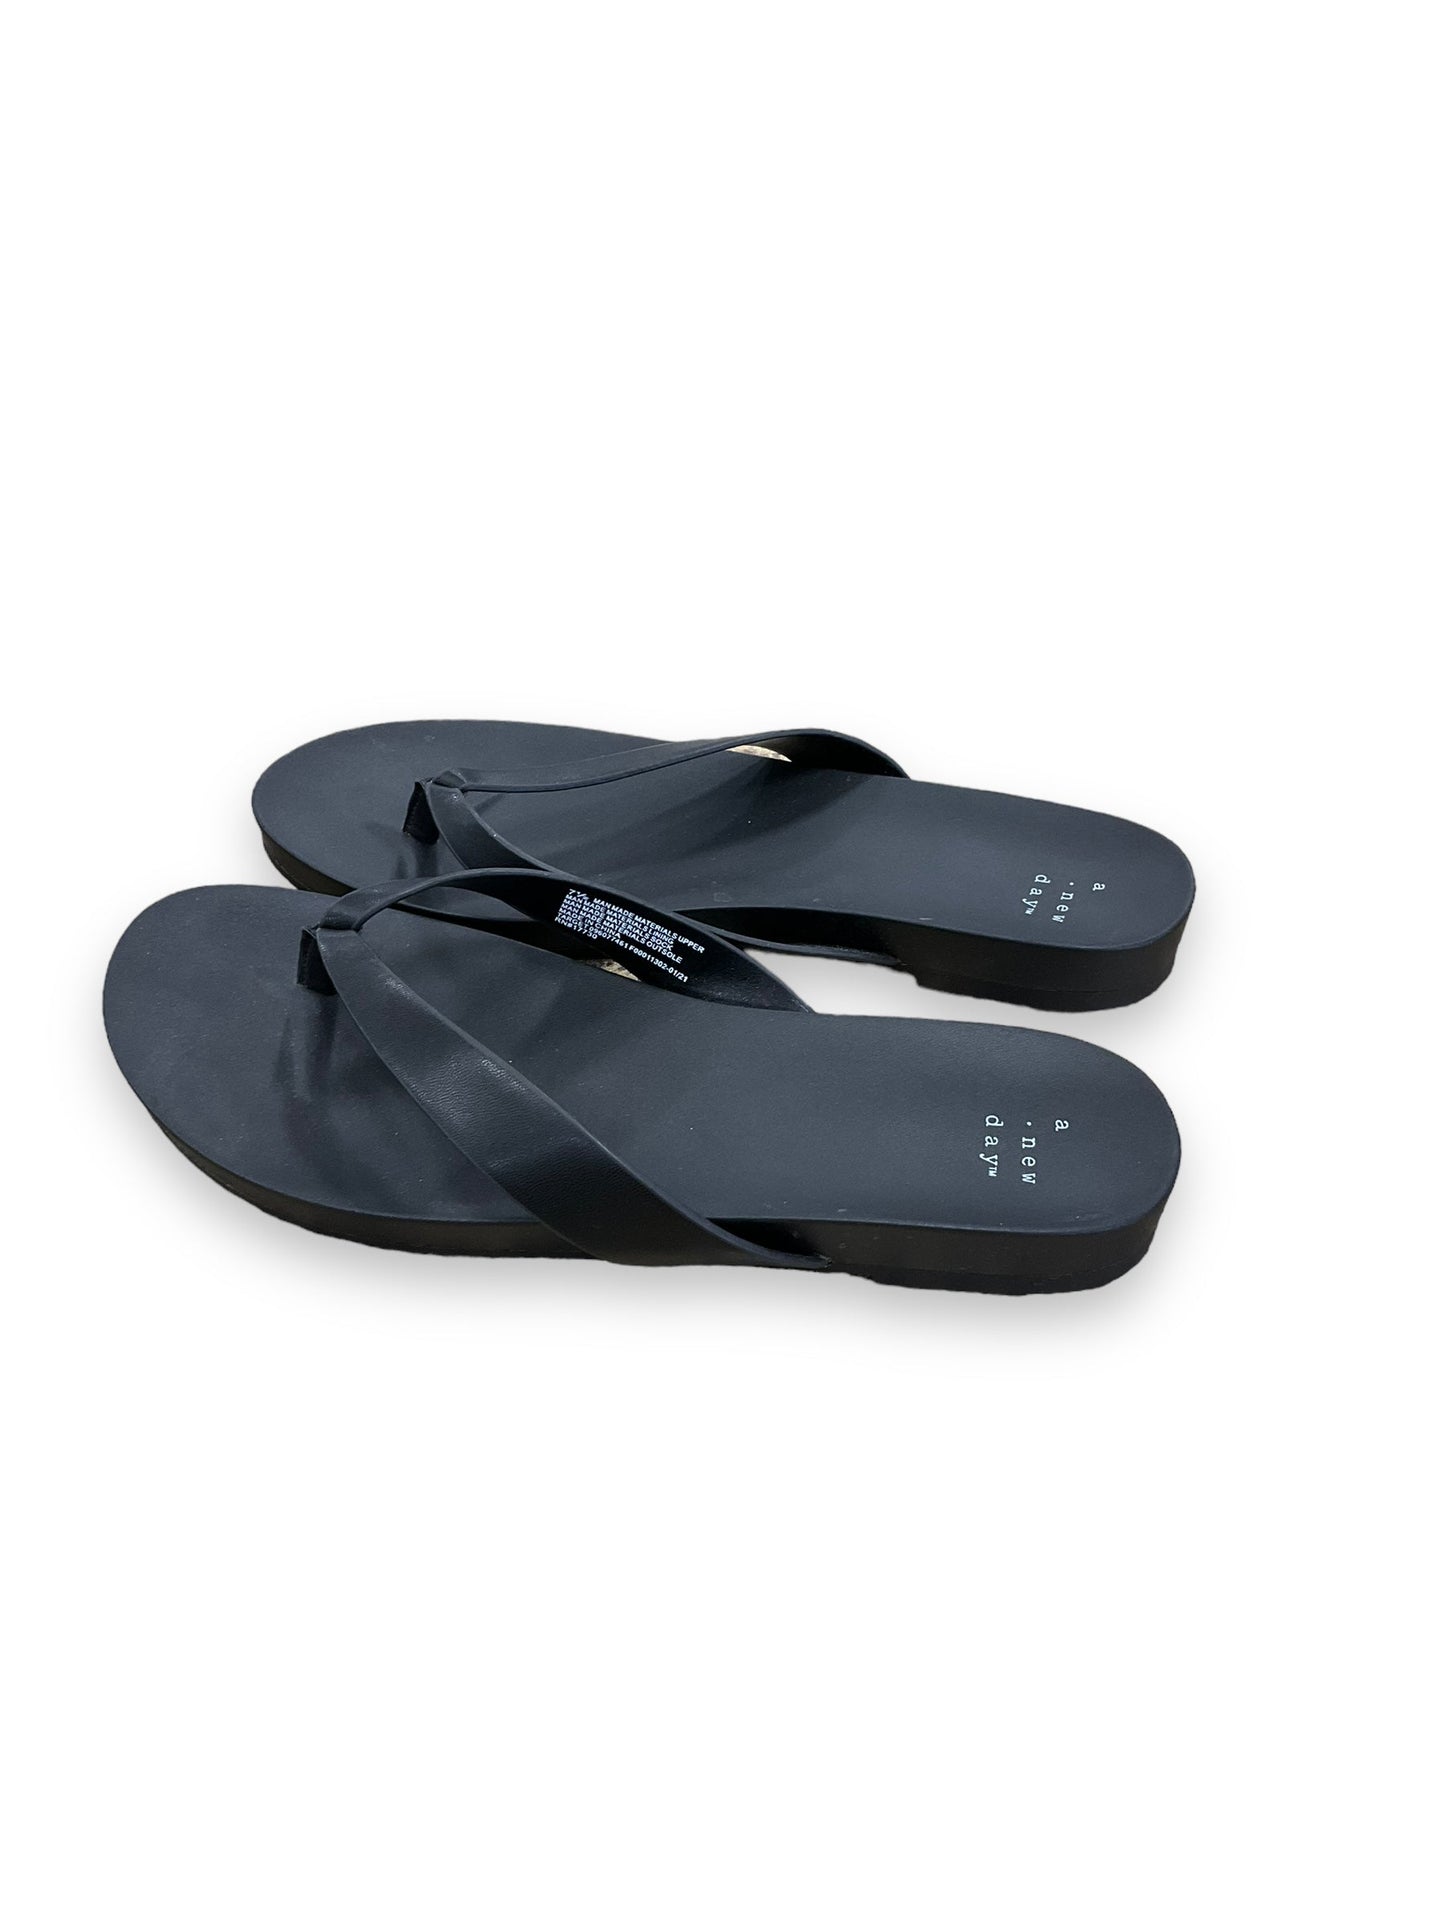 Black Sandals Flip Flops A New Day, Size 7.5